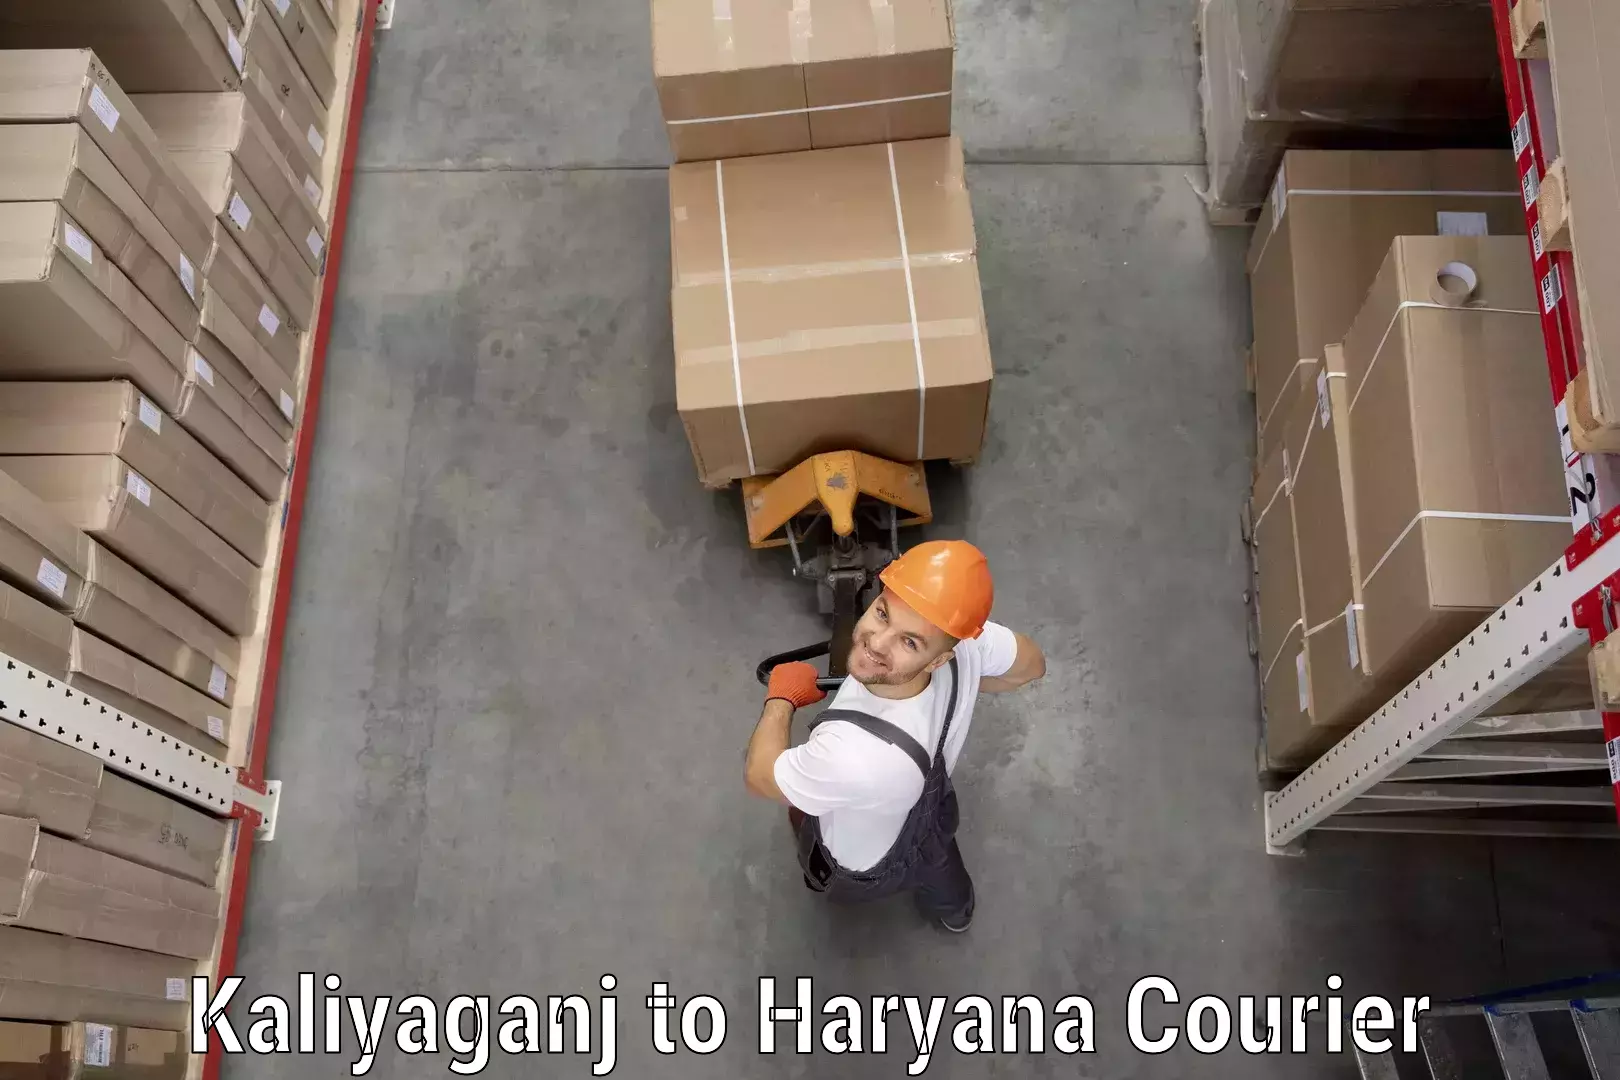 Courier service partnerships Kaliyaganj to Gurgaon